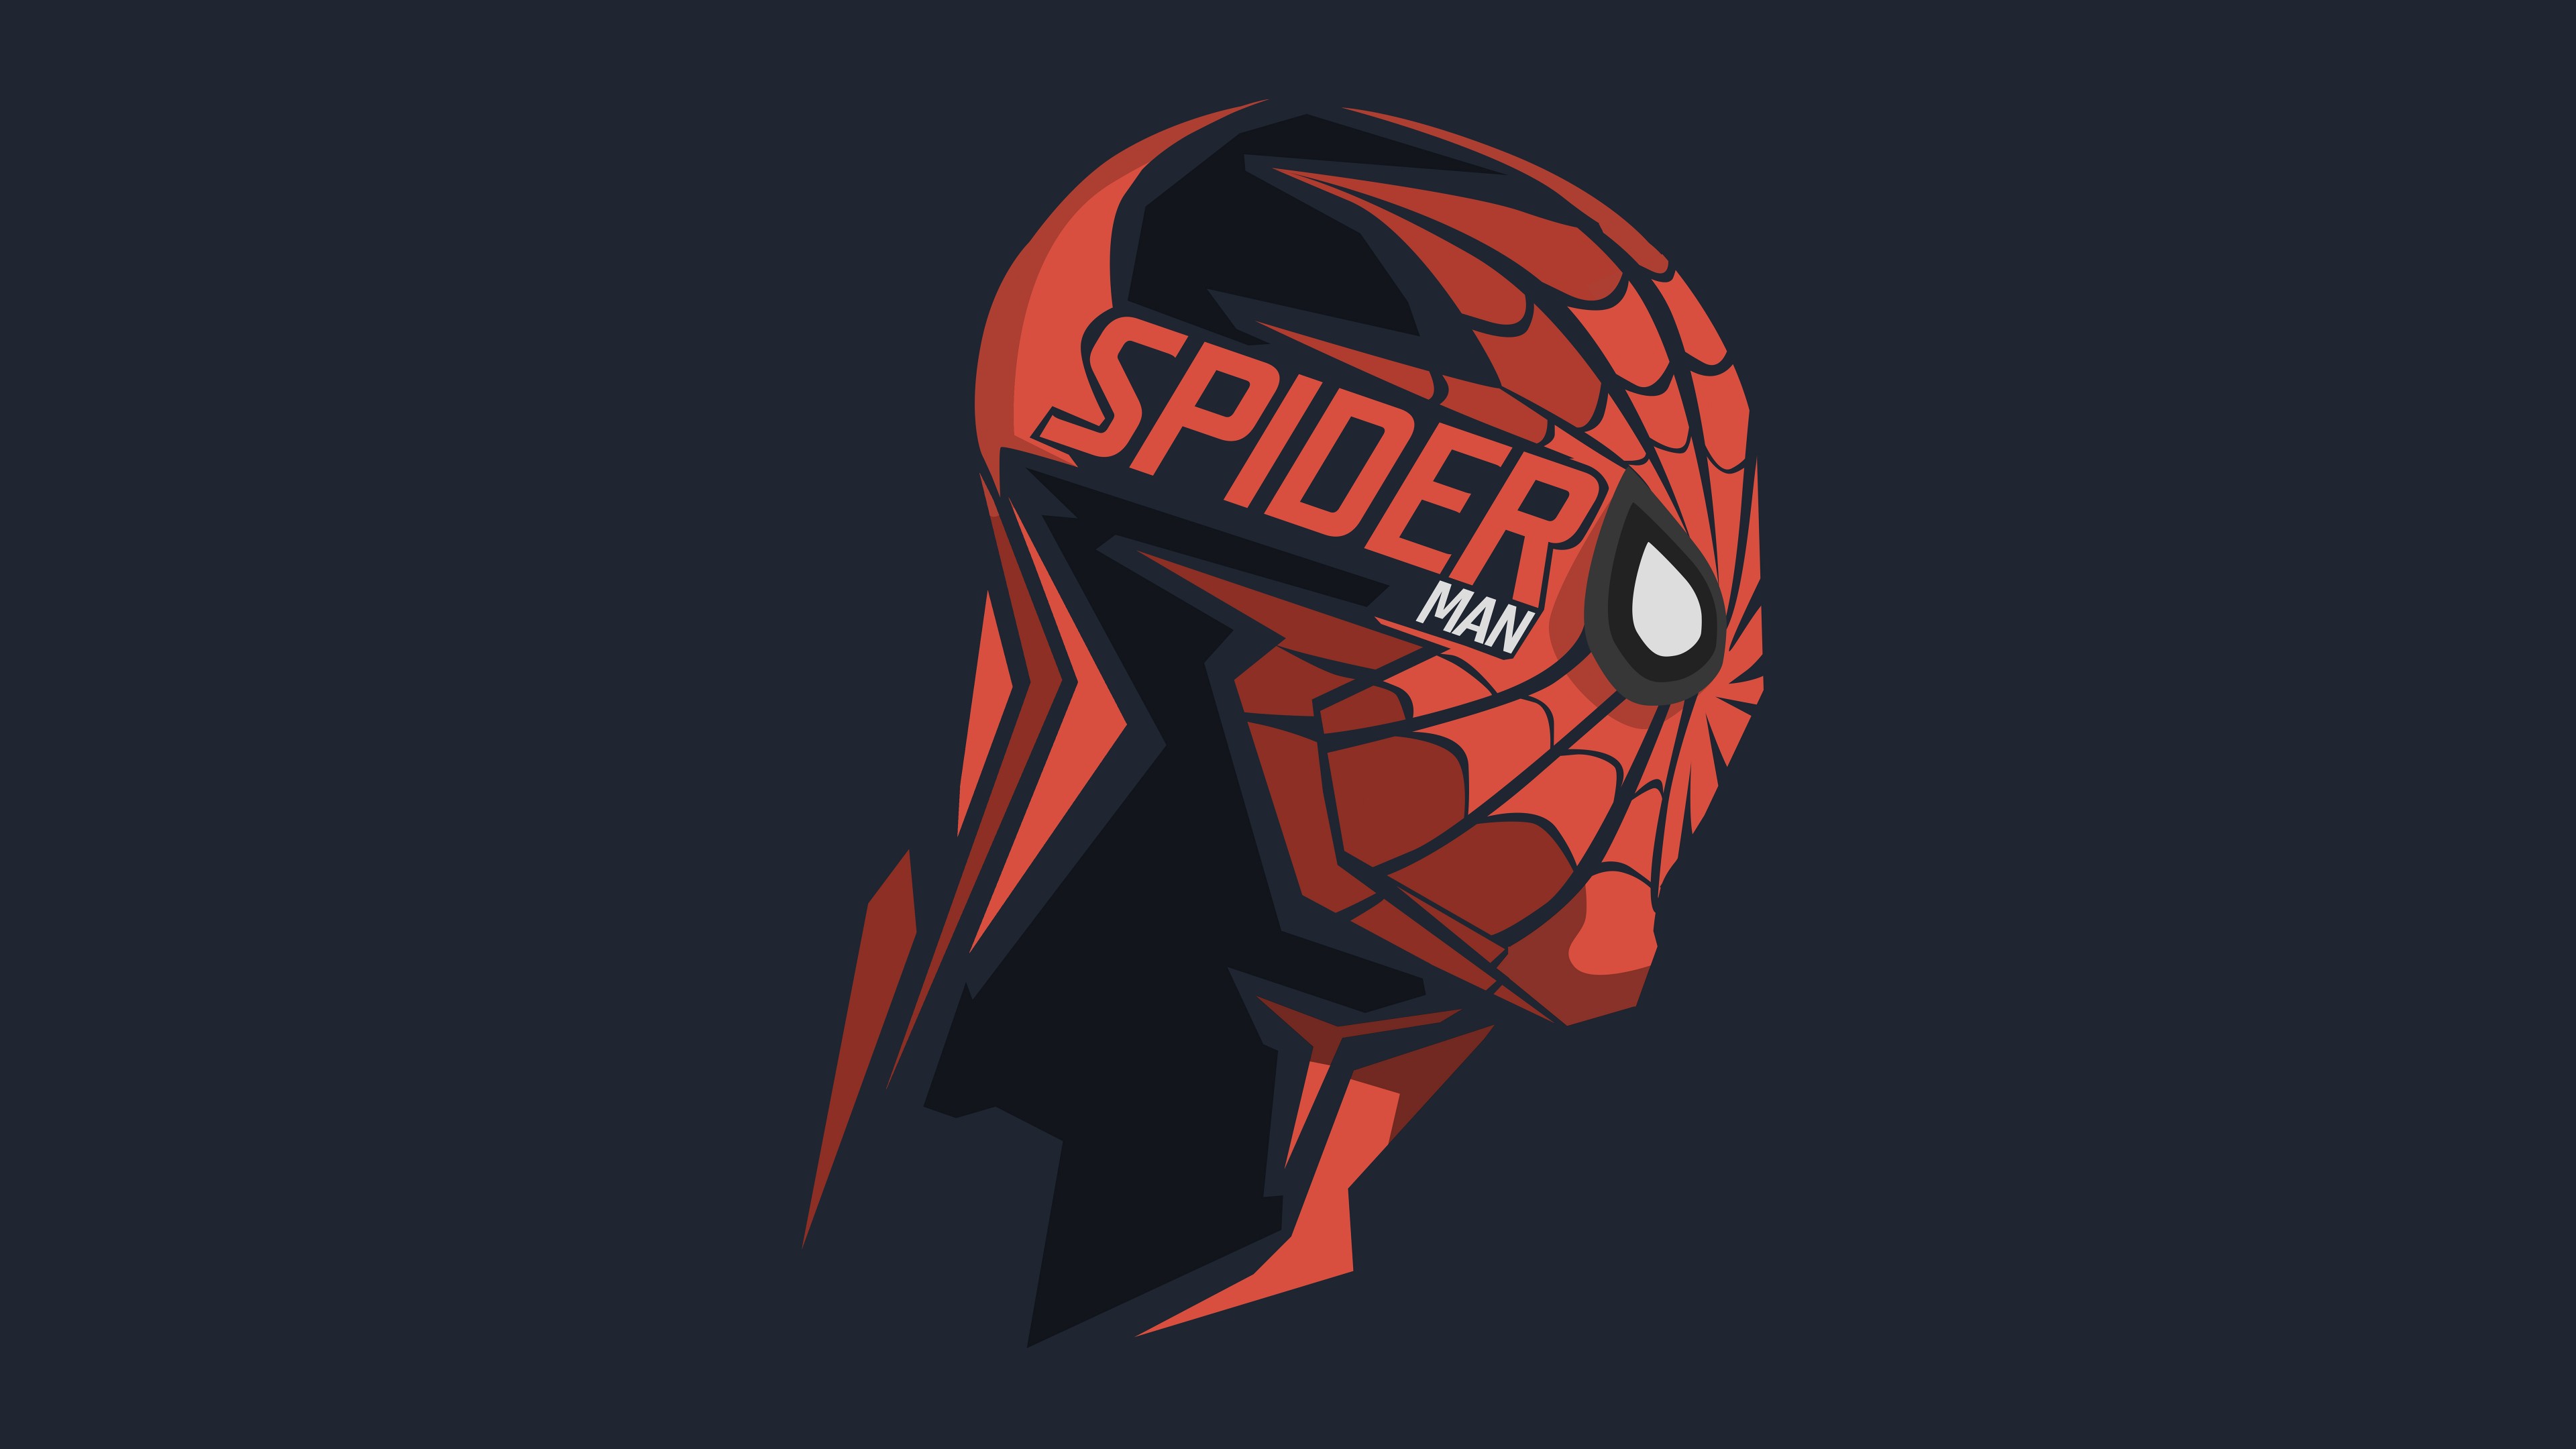 spiderman wallpaper hd,helmet,illustration,fictional character,sports gear,logo